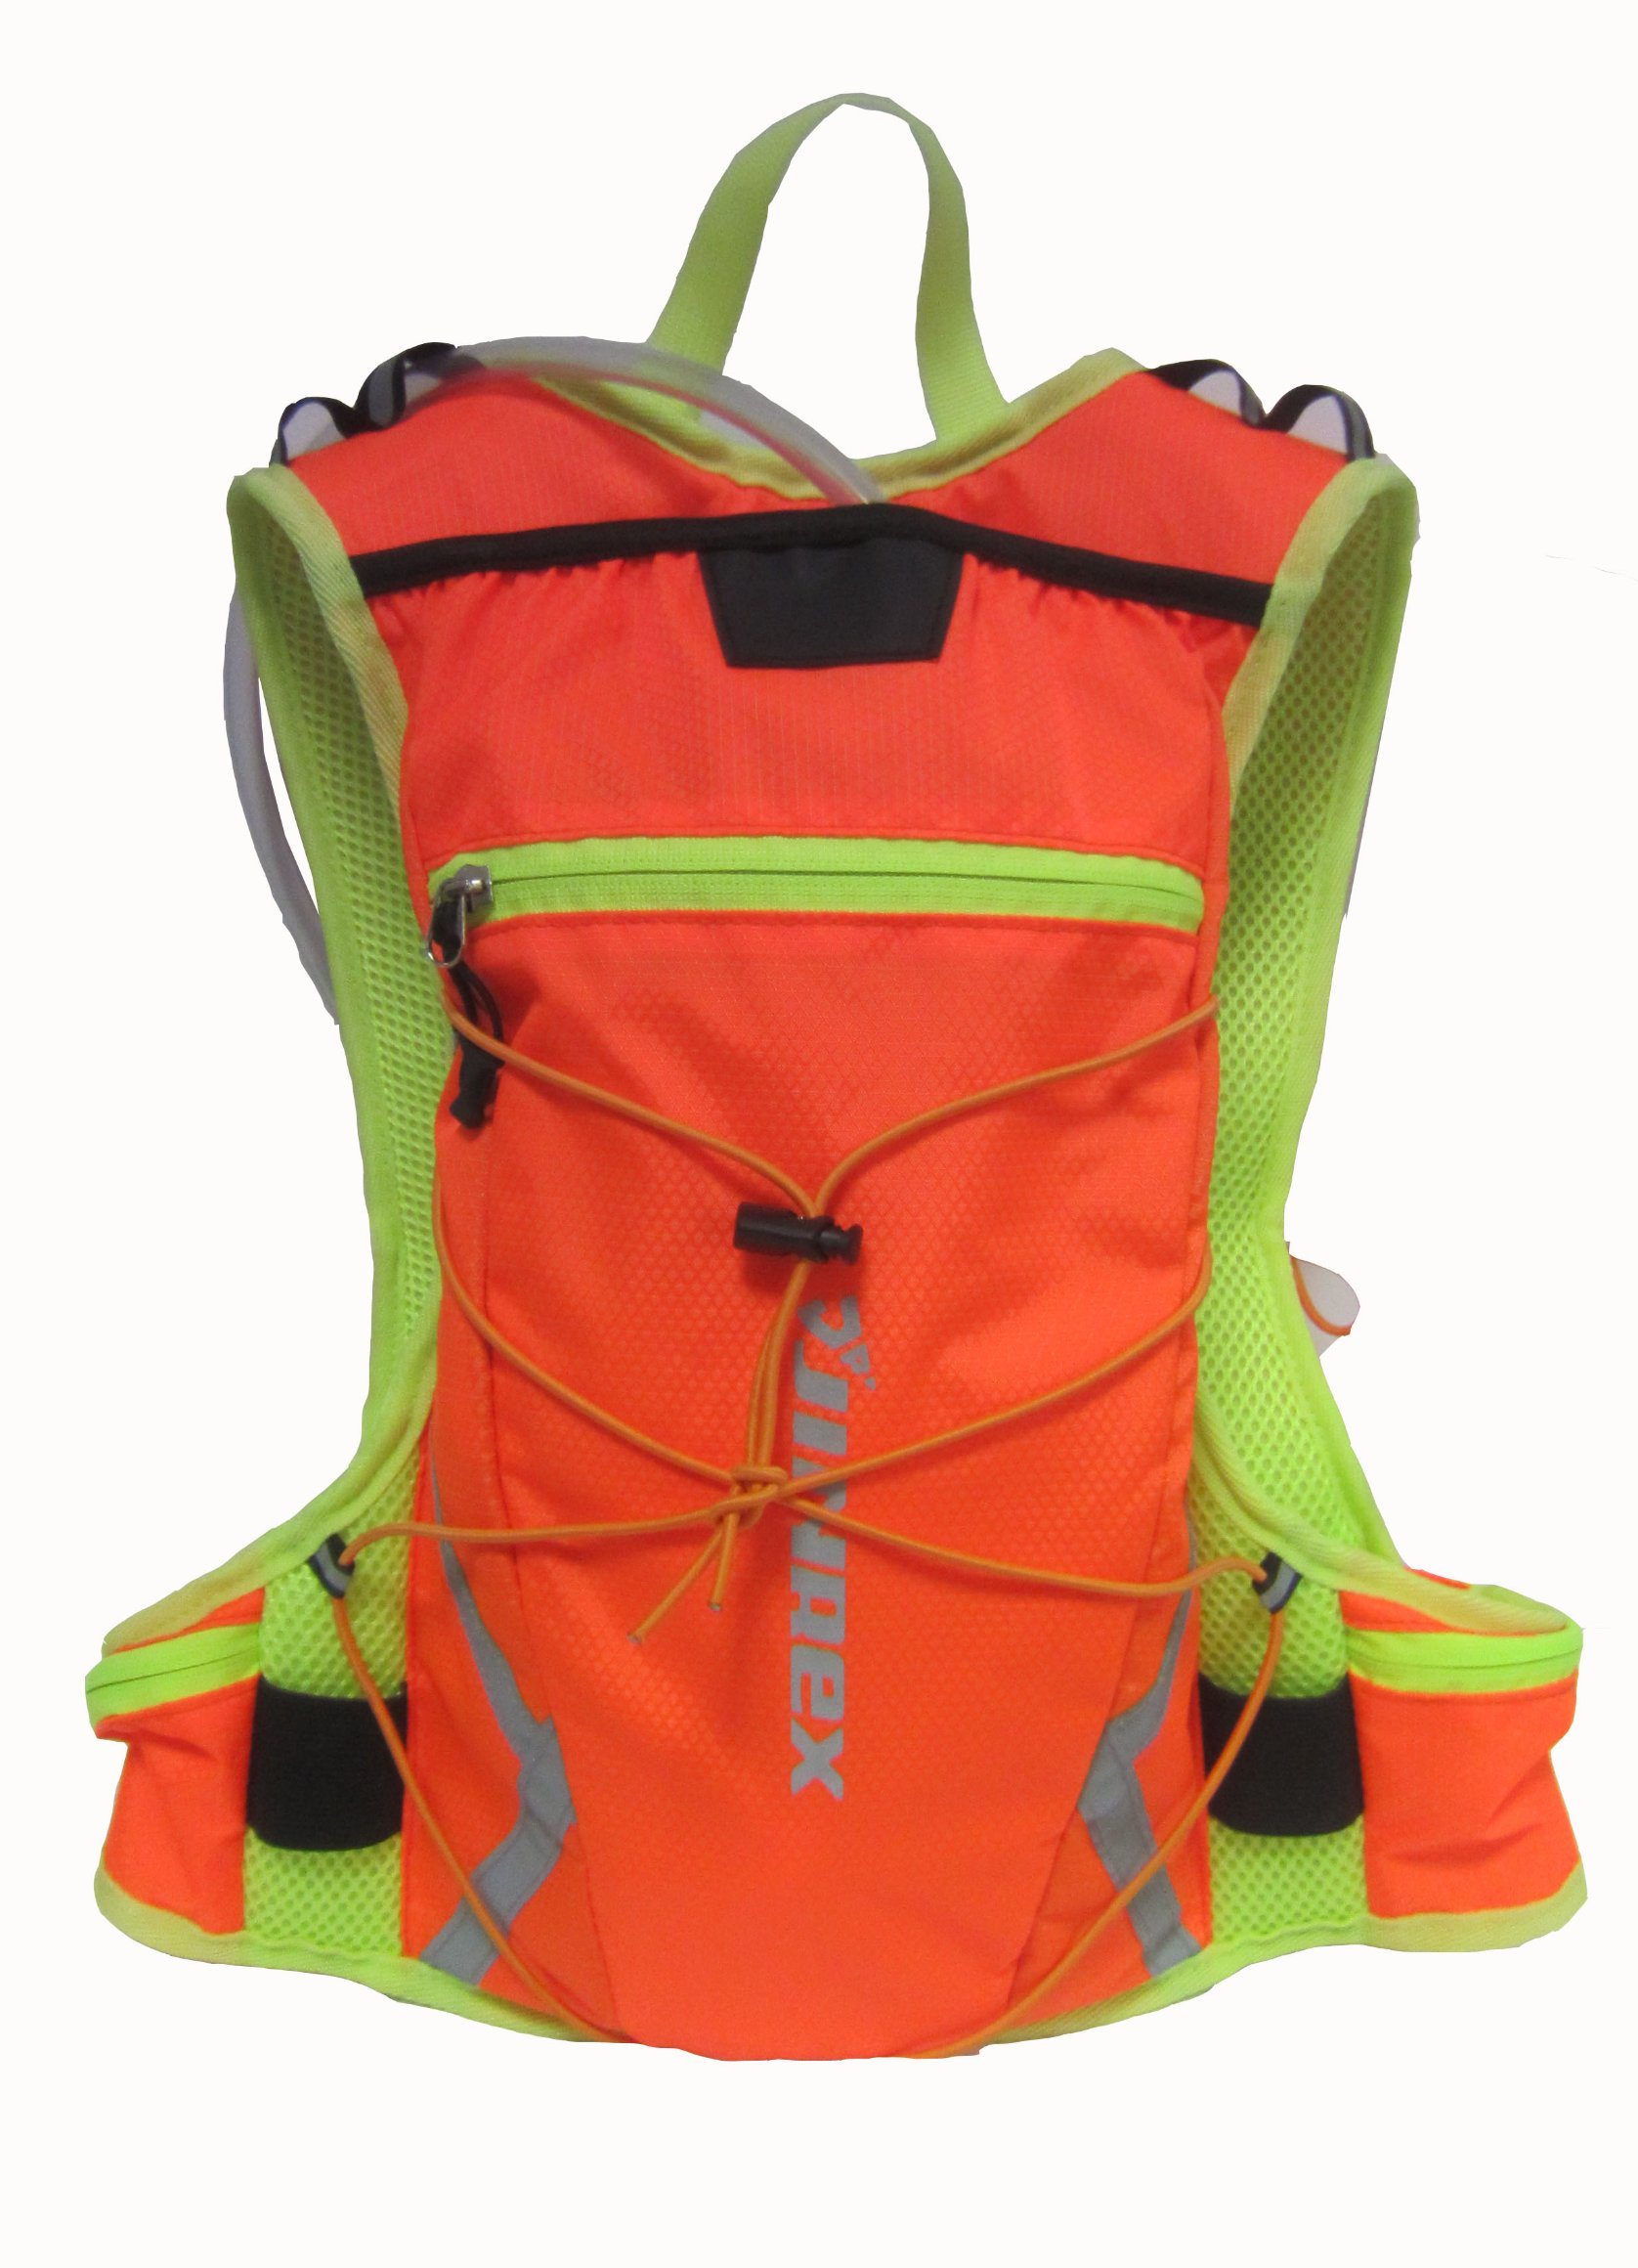 Jinrex Outdoor Sports Bike Cycling Hiking Backpack Fashion Bag/Hydration Bag-Jb15m075